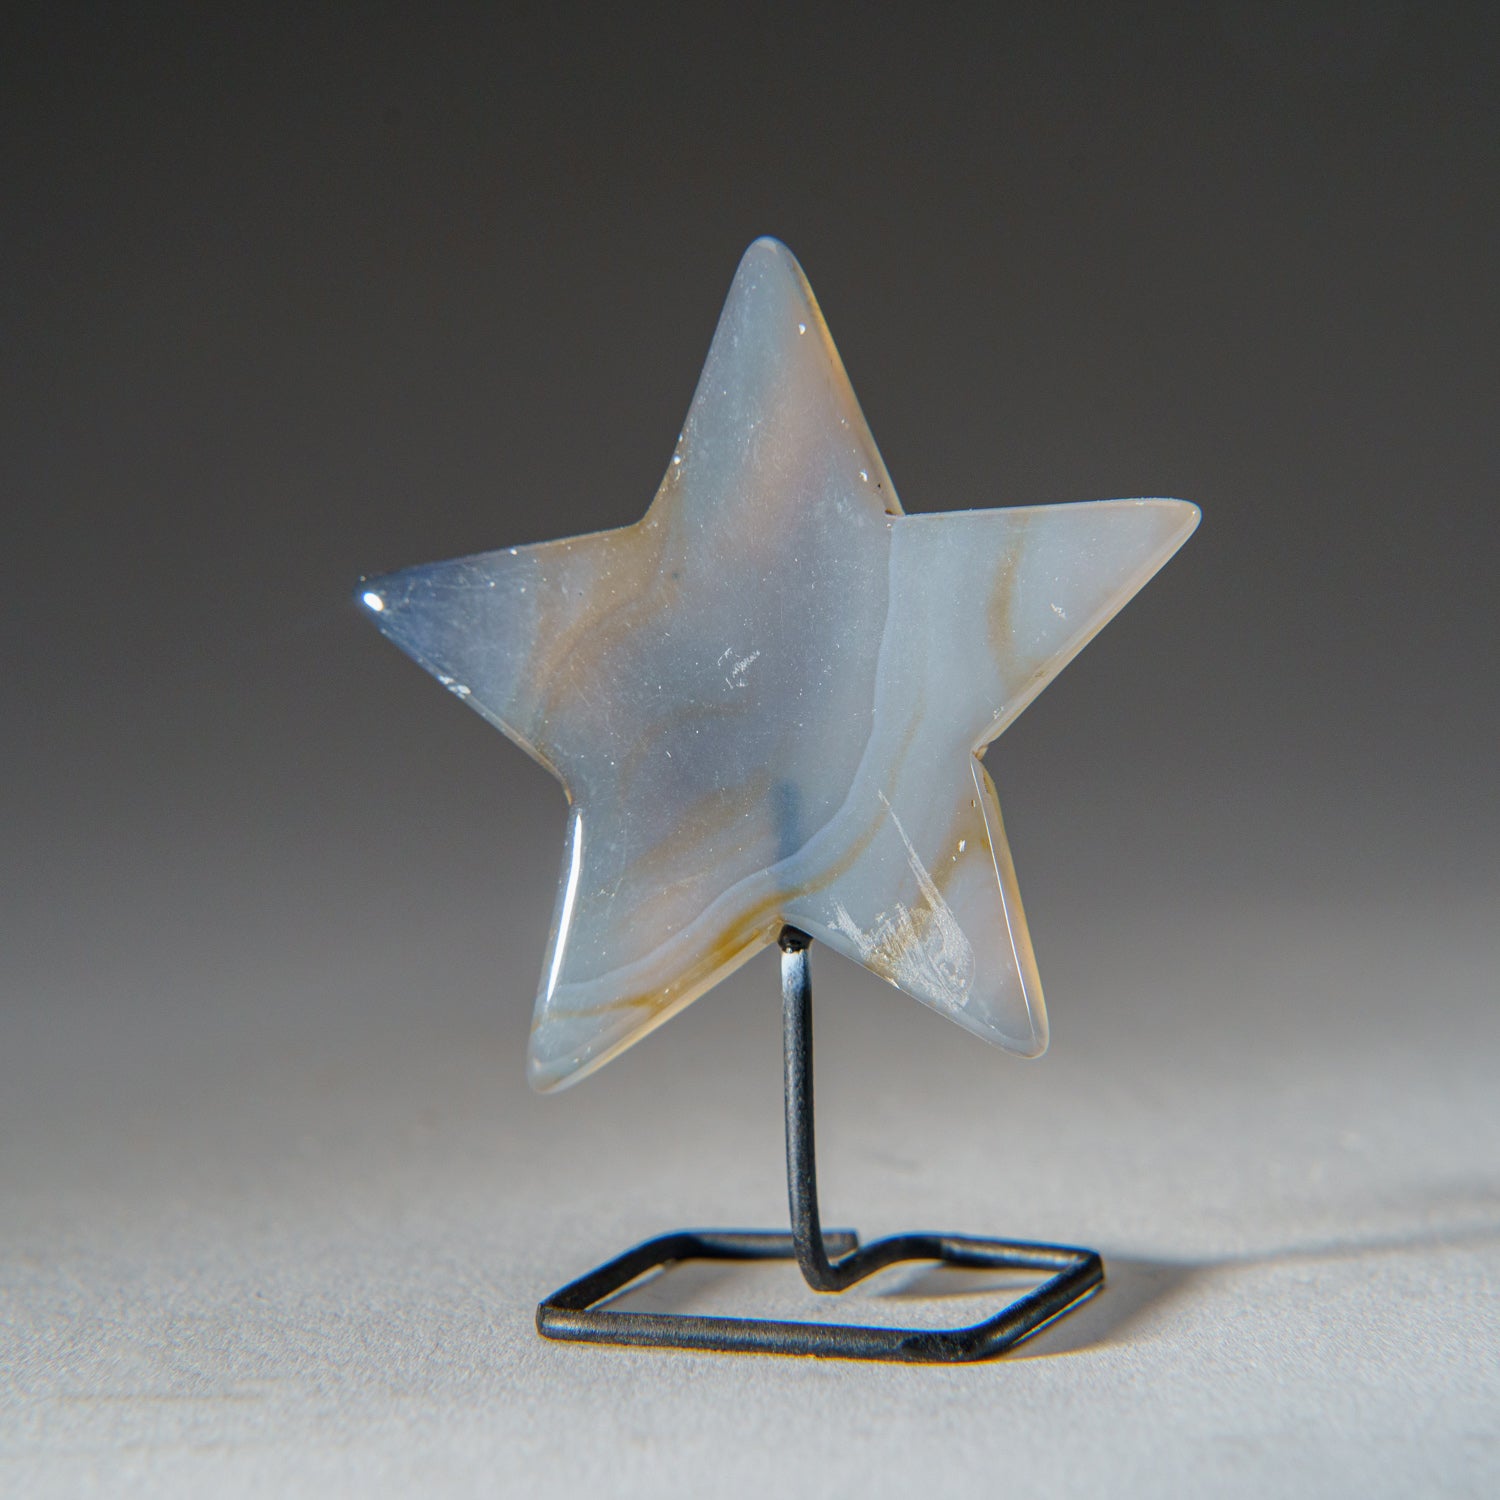 Polished Agate Star on Custom Metal Stand (30.8 grams)